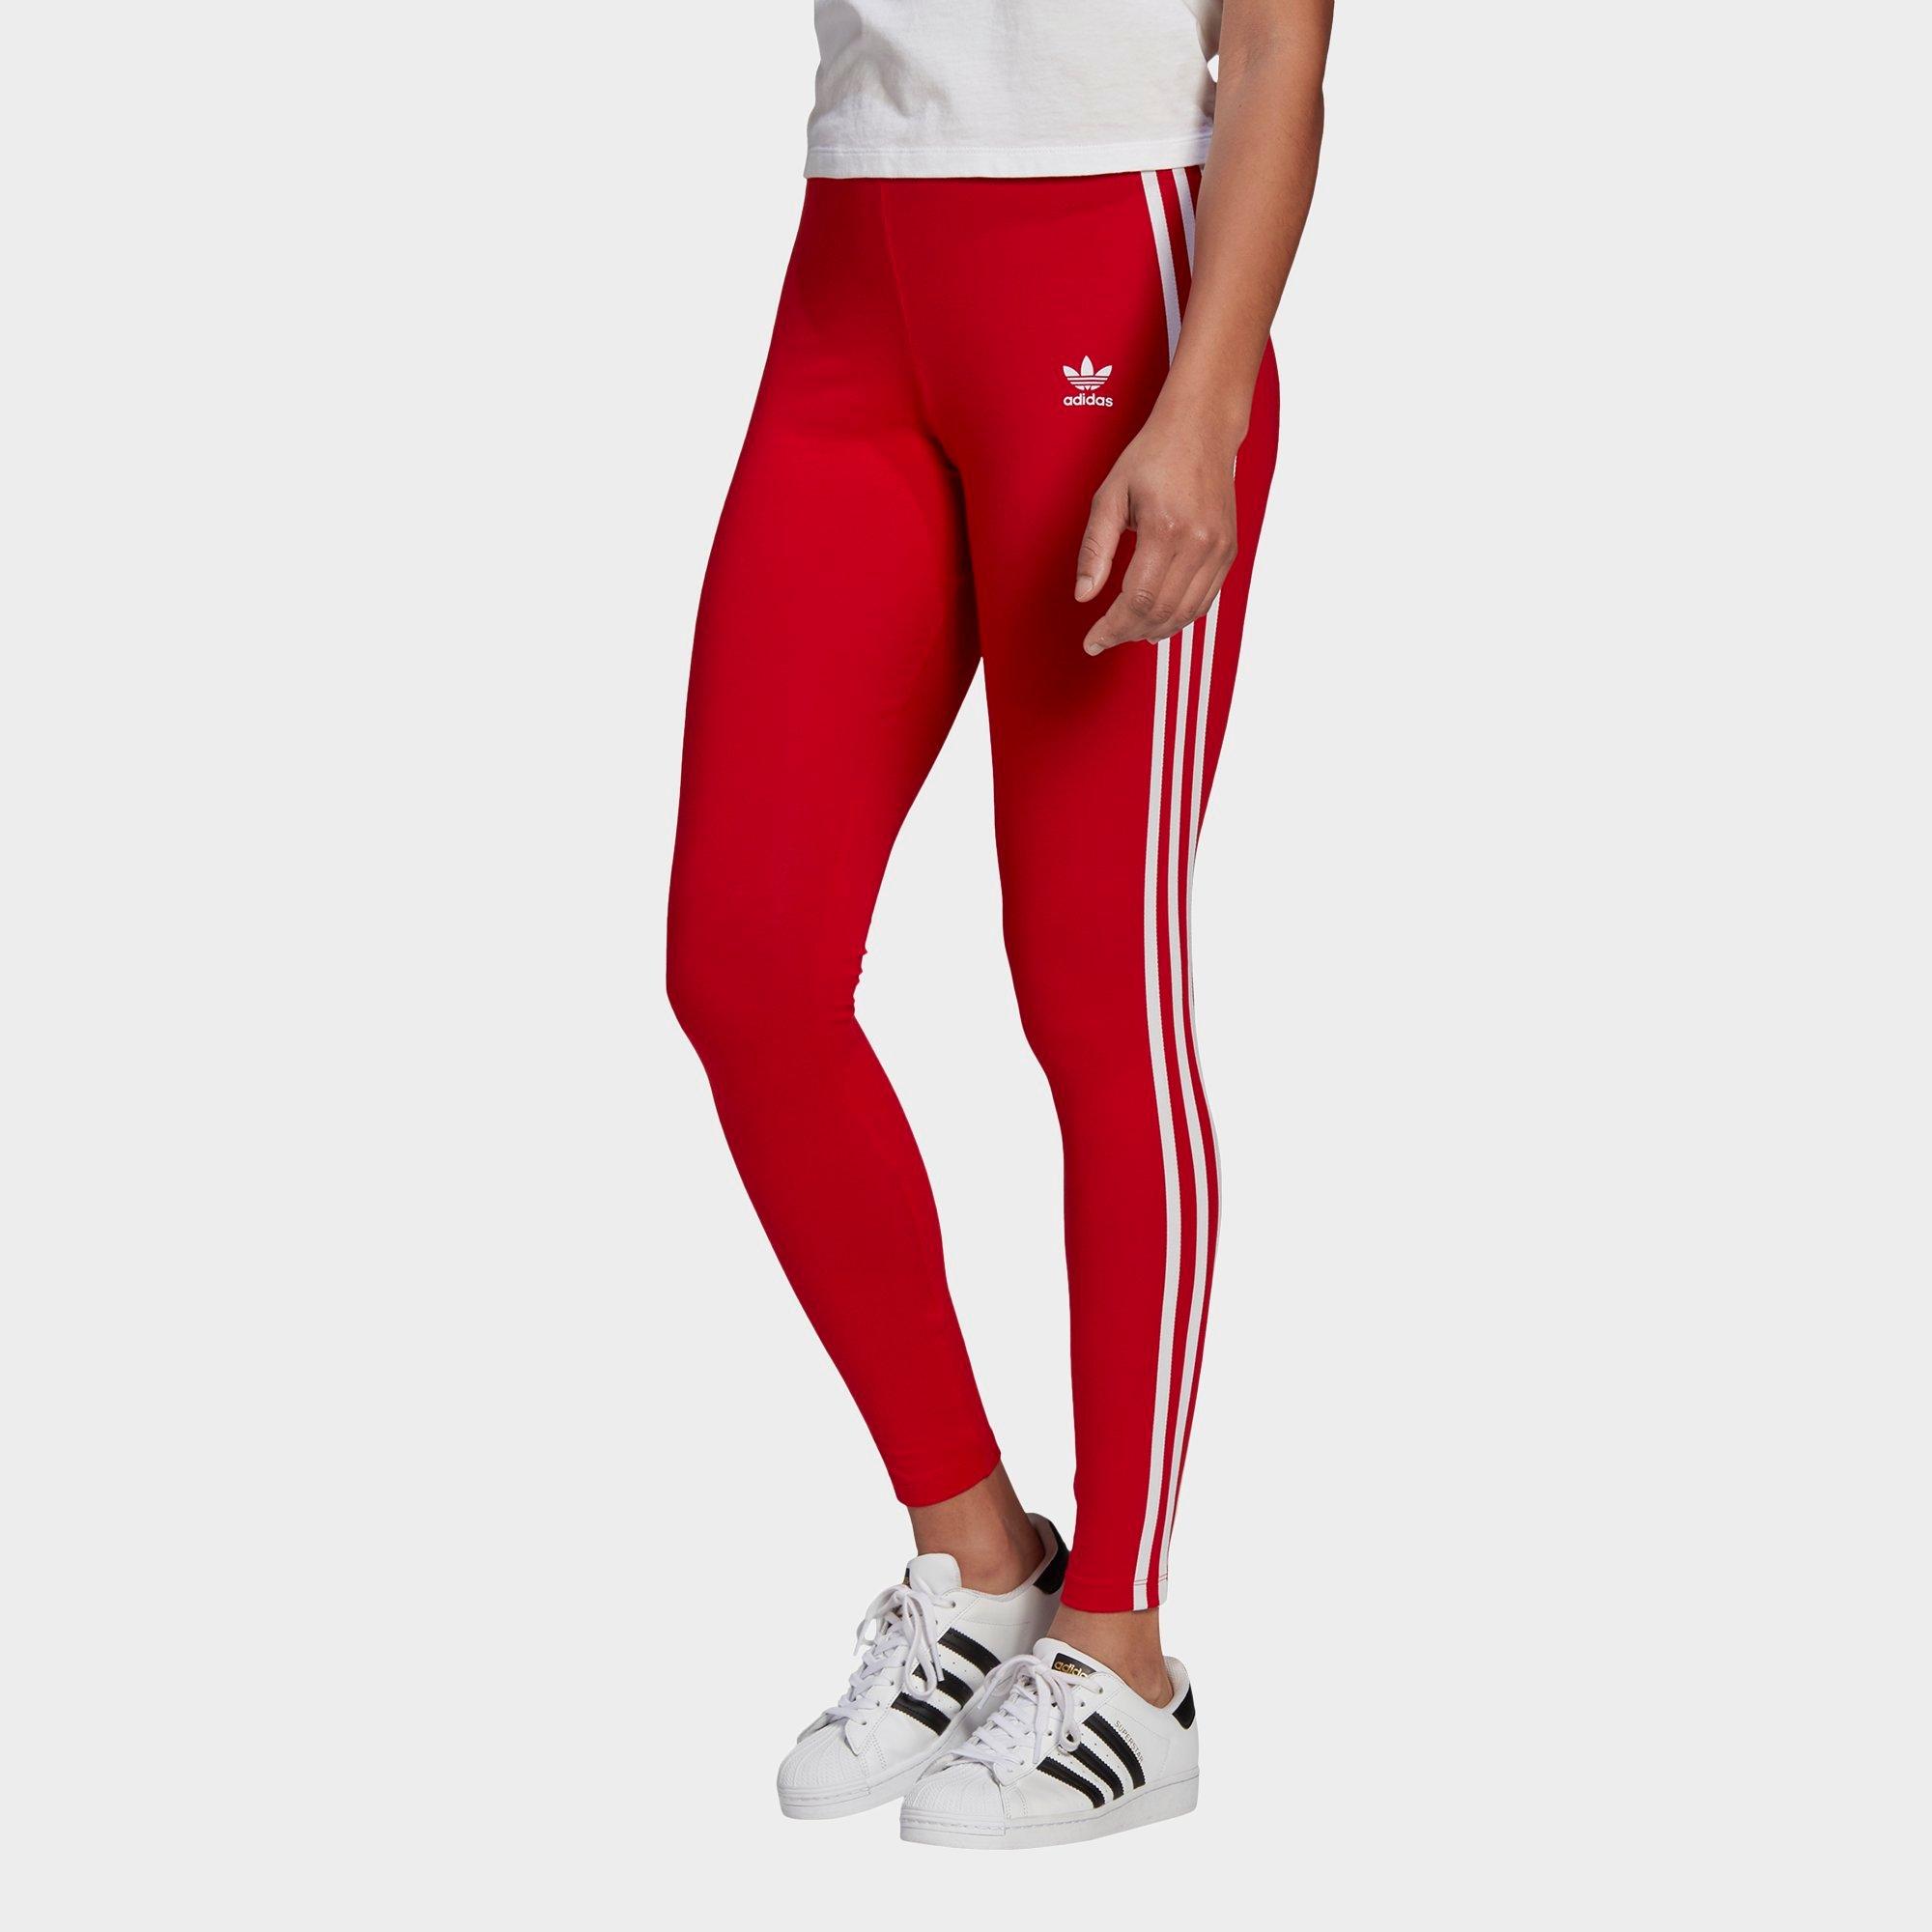 womens adidas leggings jd sports